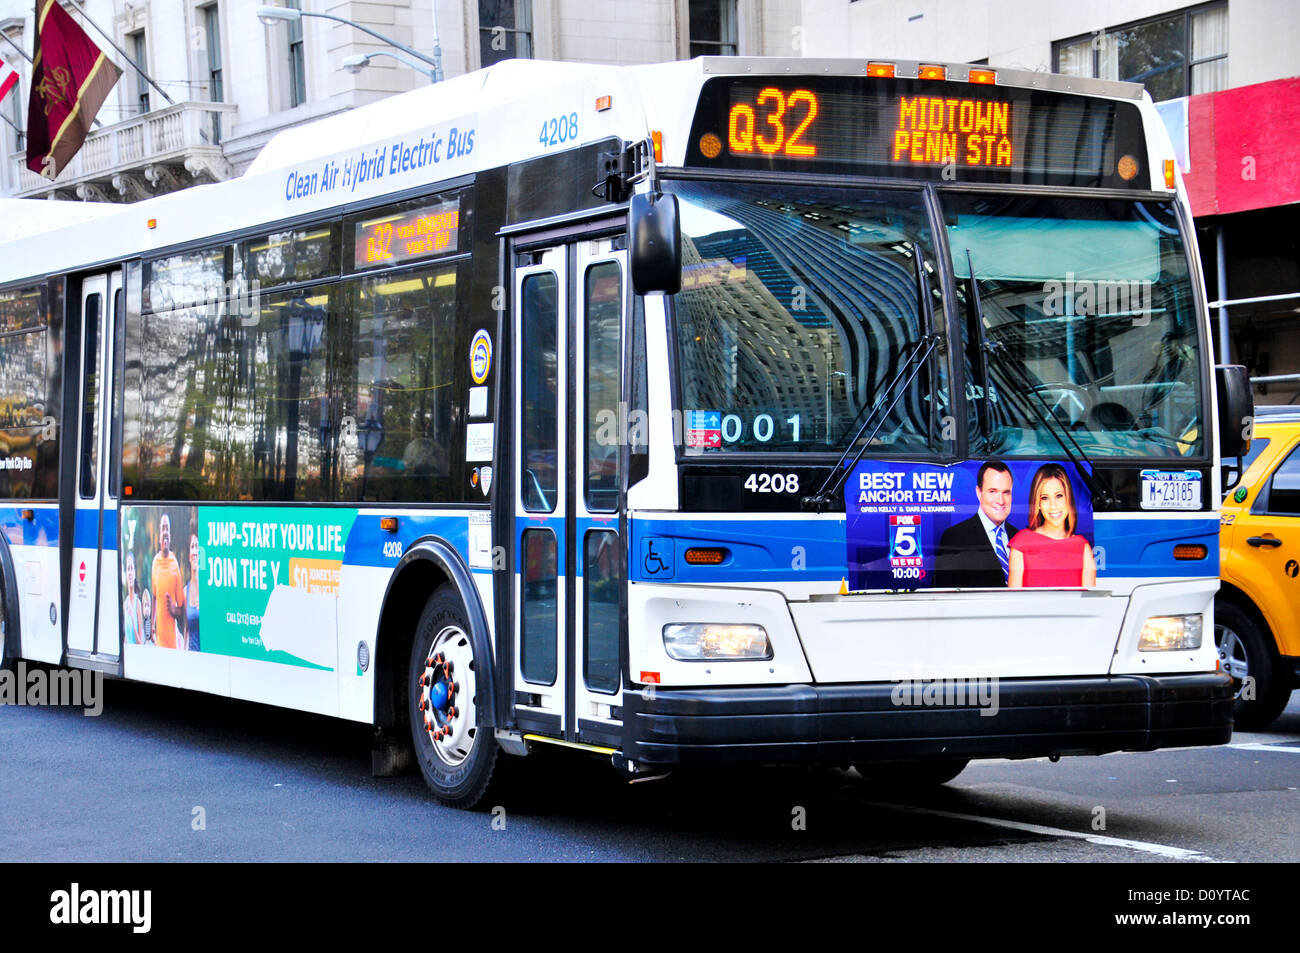 New York City Public Transportation Q32 Bus, Manhattan, New York City ...